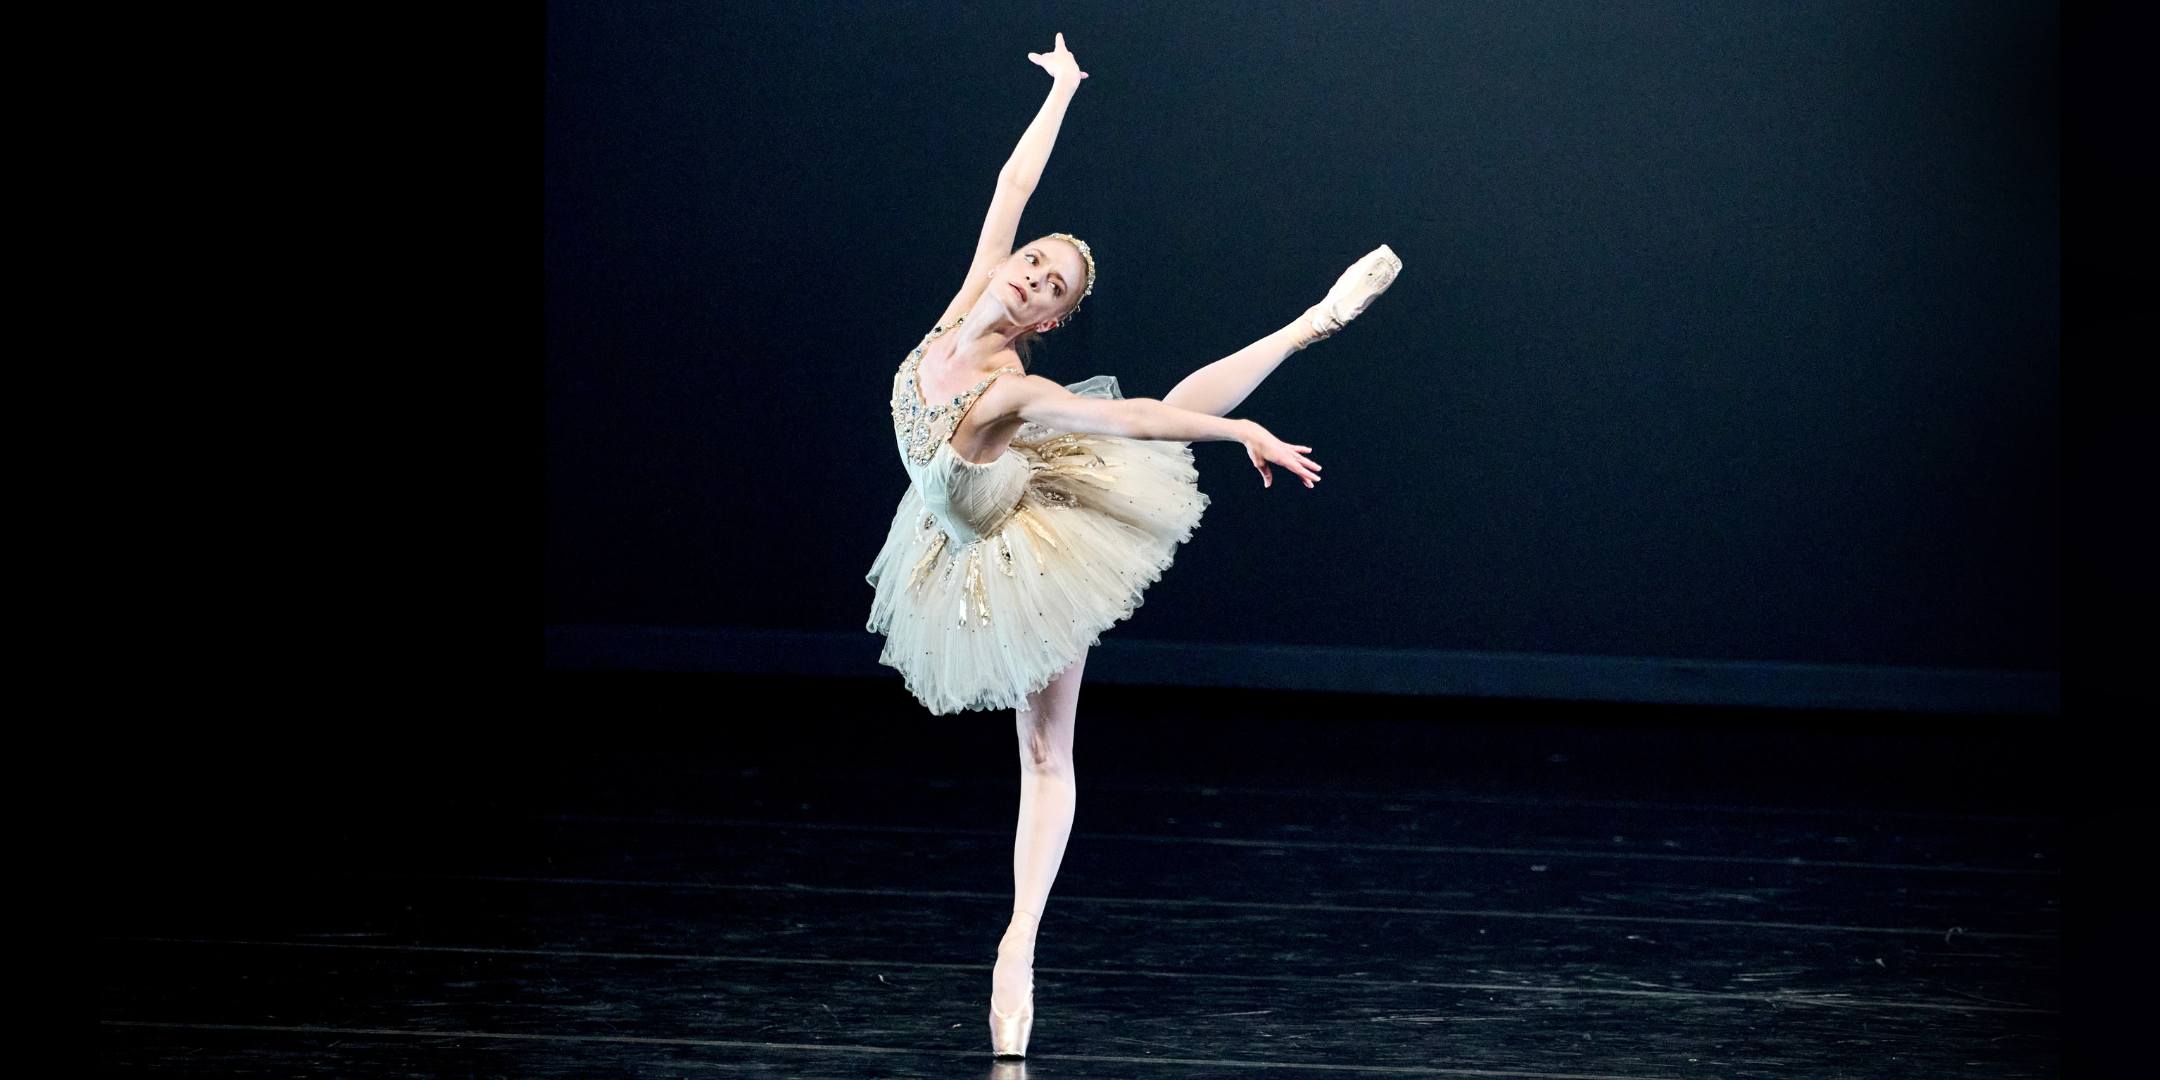 Sasha De Sola dances in George Balanchine's "Diamonds," standing in a beautiful arabesque croise on pointe.